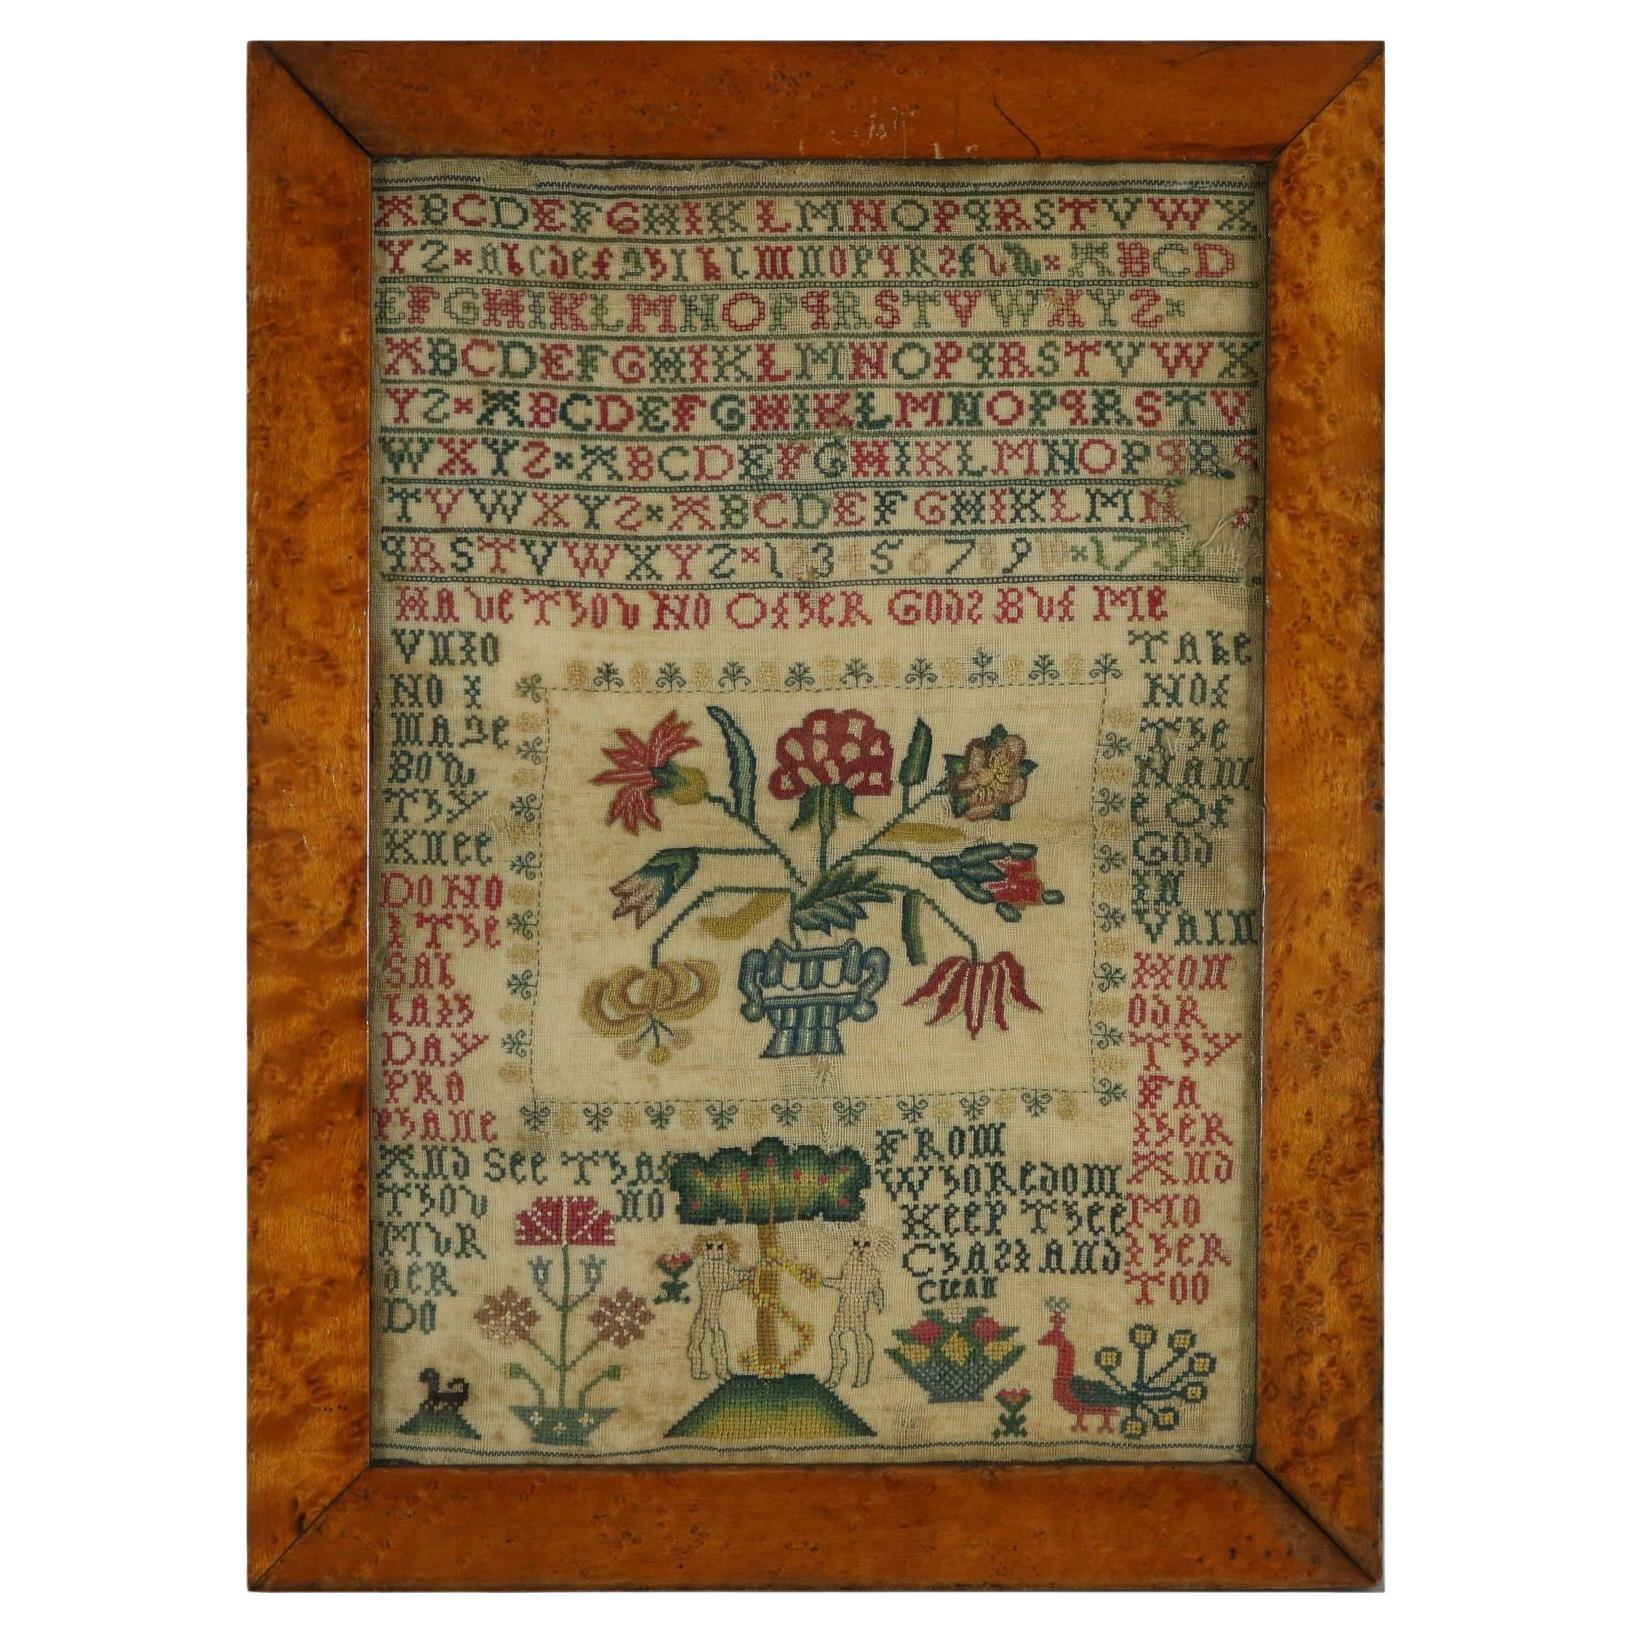 Antique Sampler Stitched in 1736, Scottish